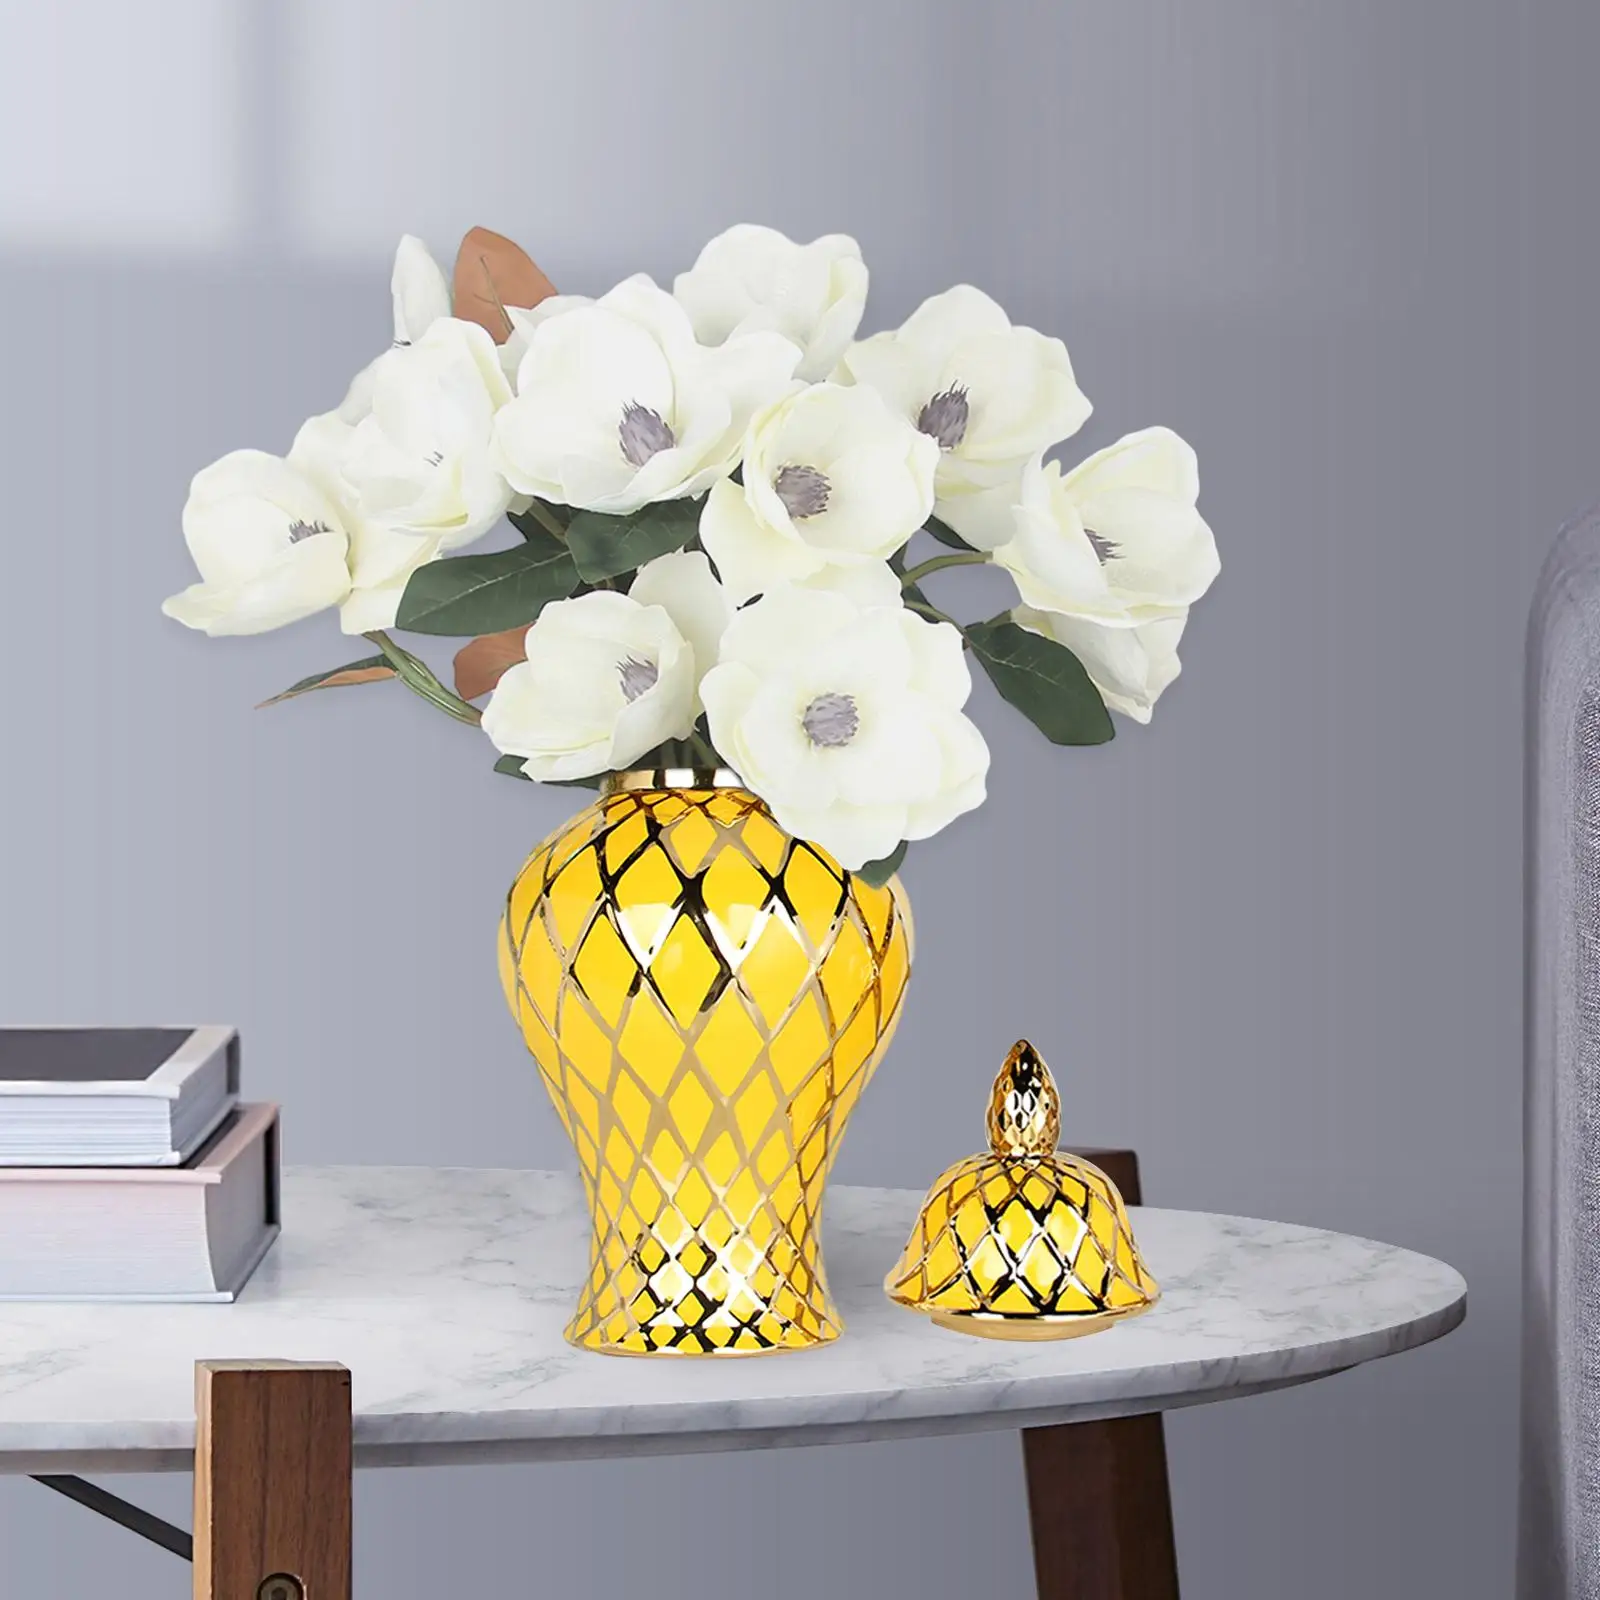 Ceramic Vase Table Centerpieces Decorative Accessories Porcelain Ginger Jar for Storage Tank Party Livingroom Office Bedroom